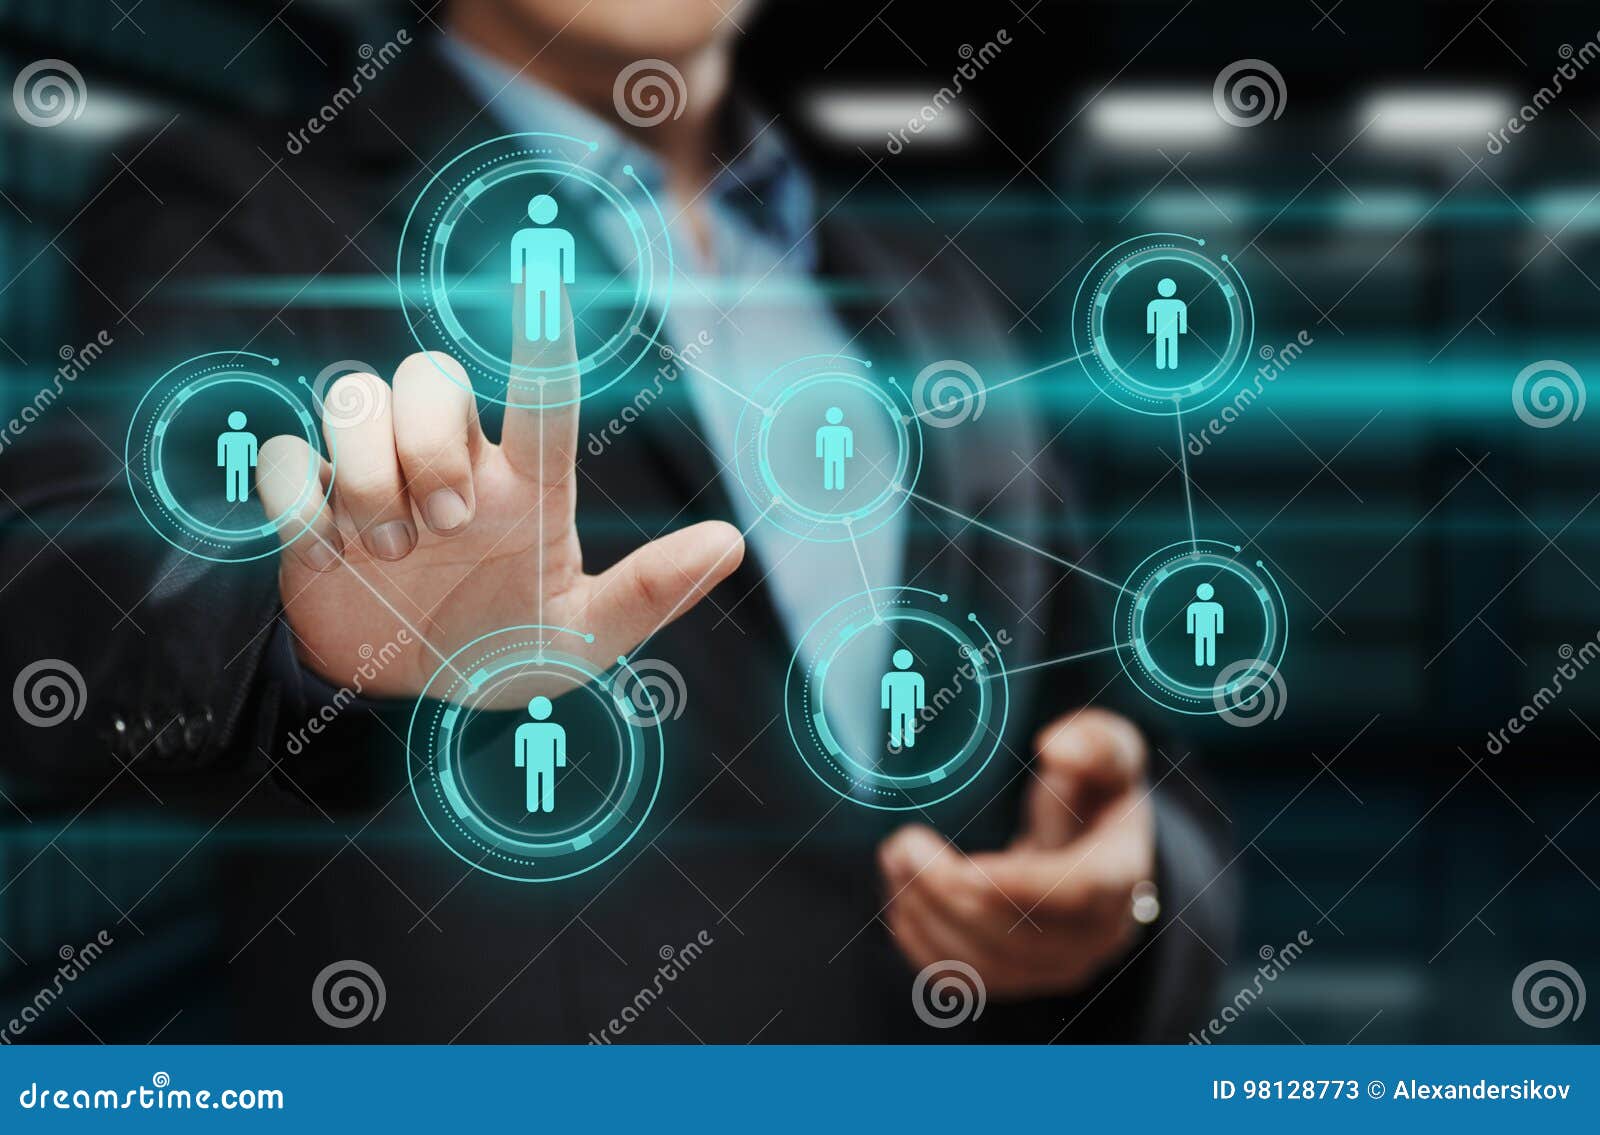 human resources hr management recruitment employment headhunting concept